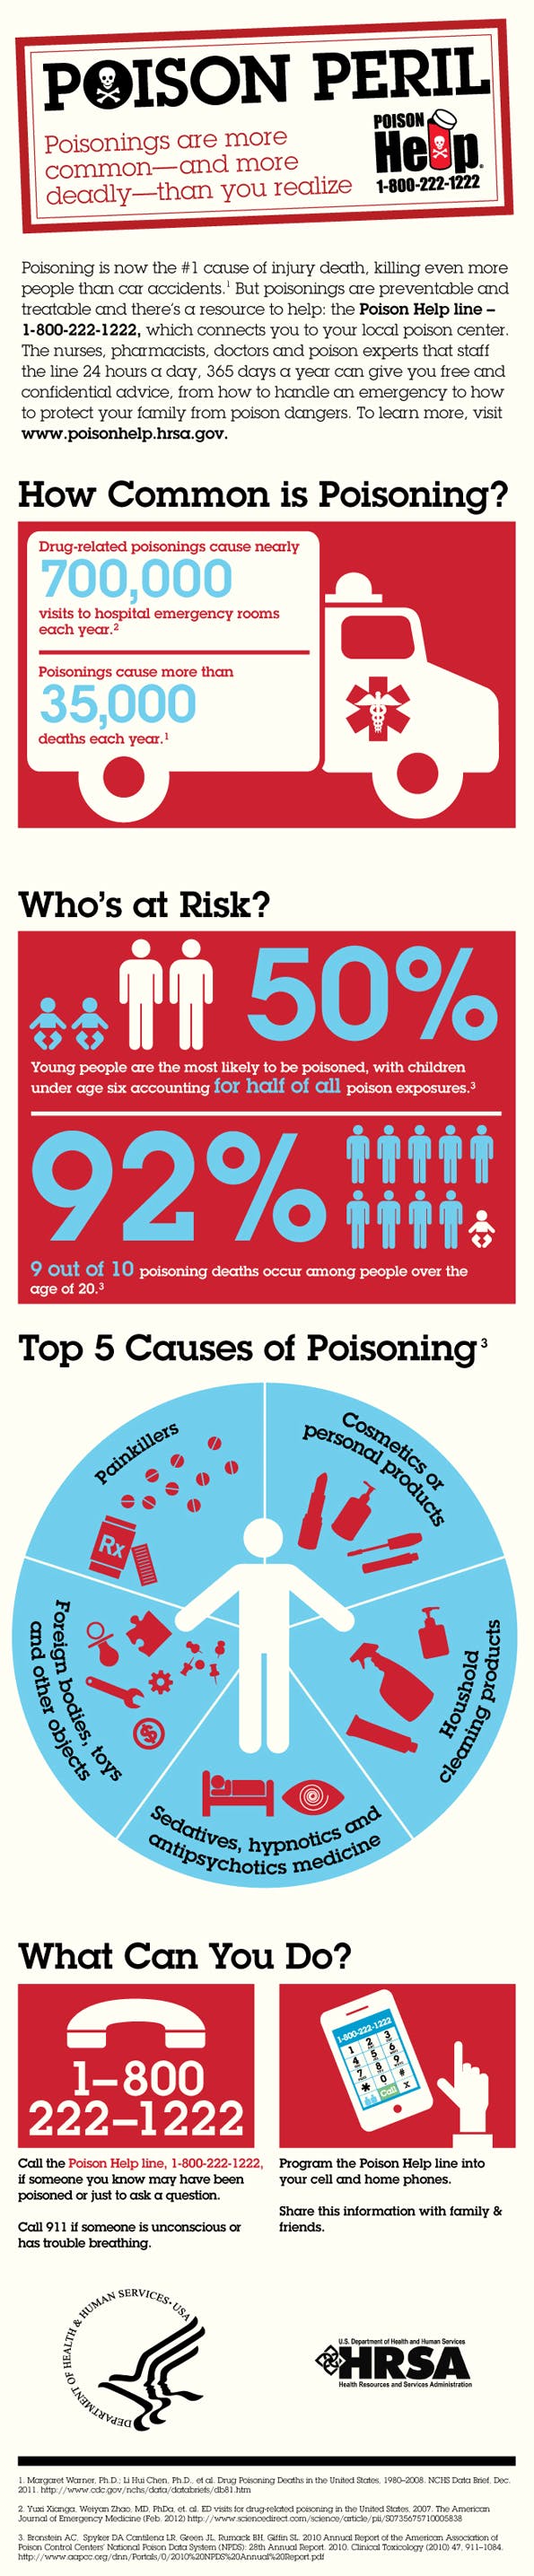 Ehstoday Com Sites Ehstoday com Files Uploads 2013 03 Poison Infographic